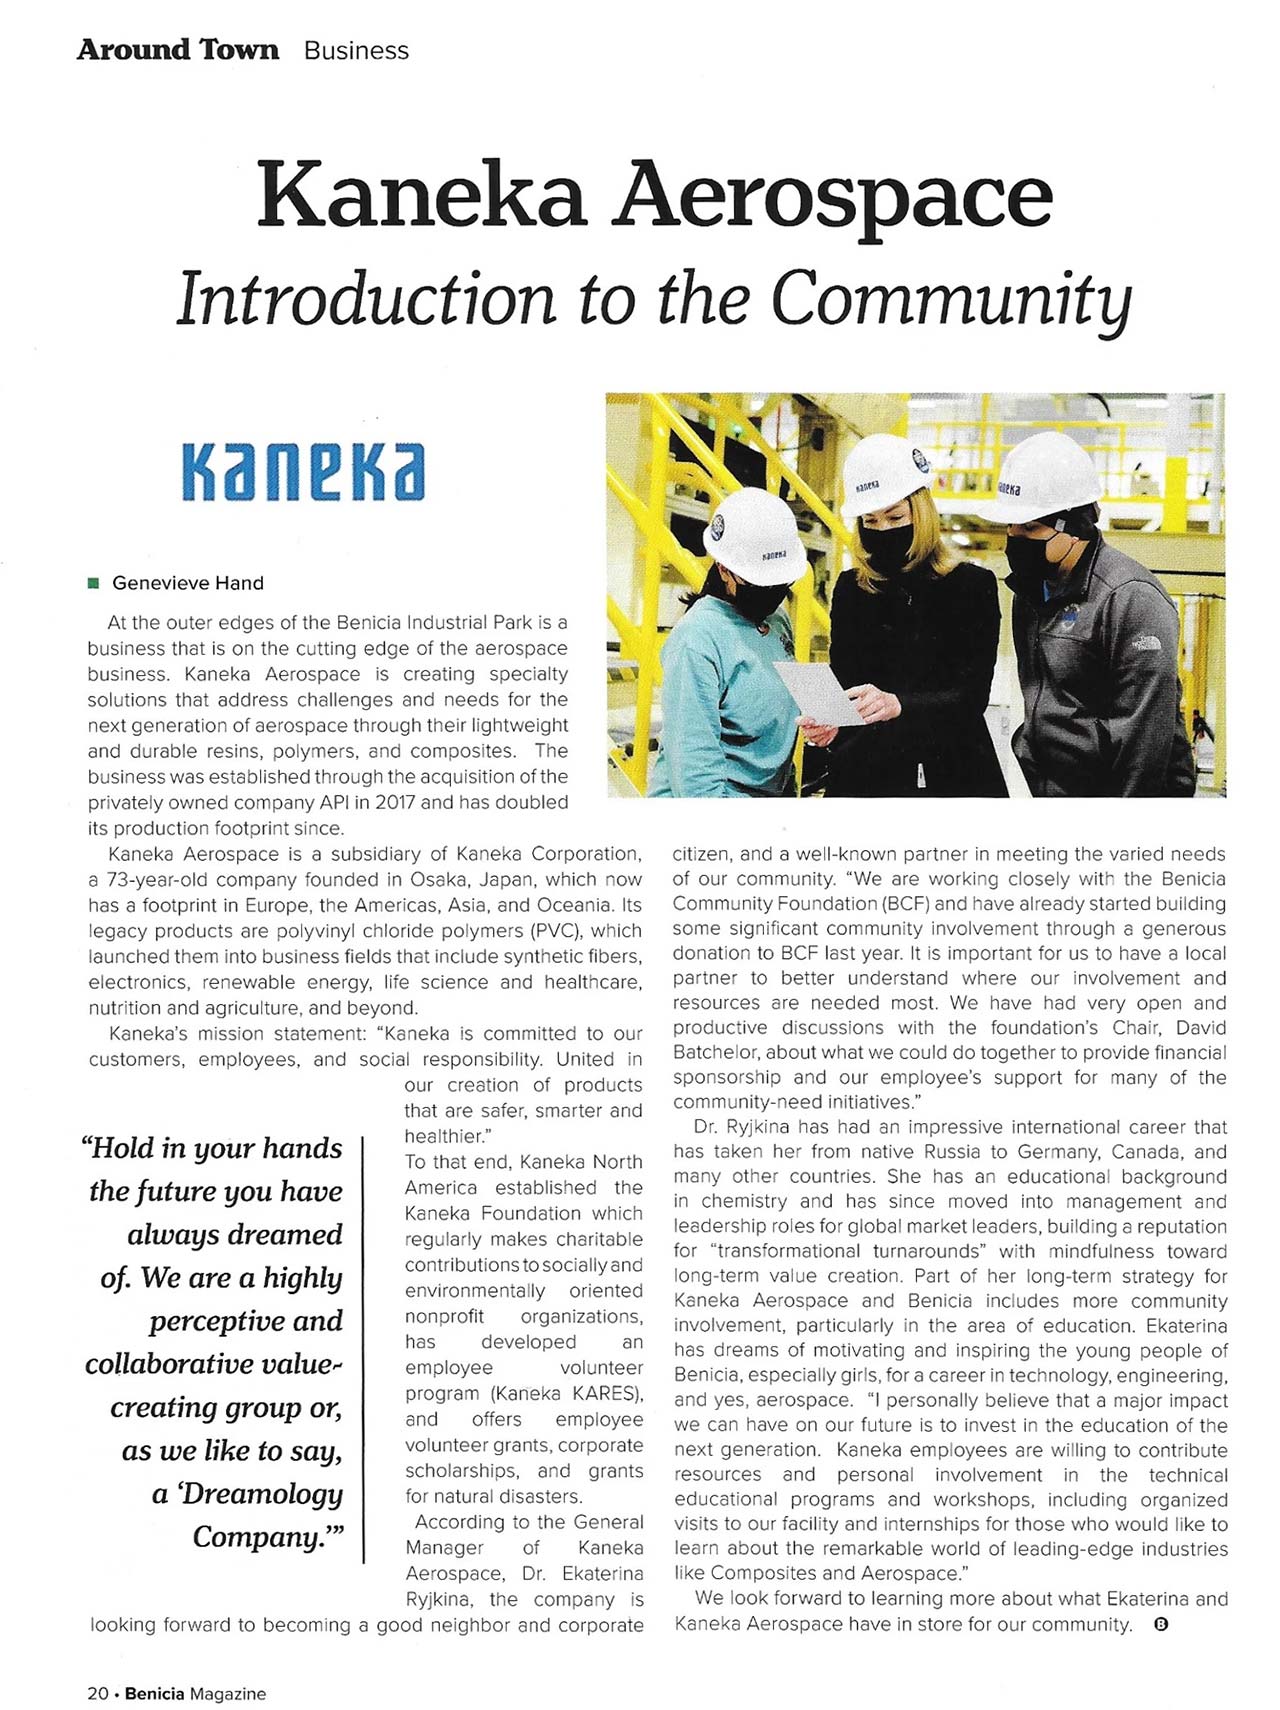 Kaneka Aerospace and Benicia Community Foundation